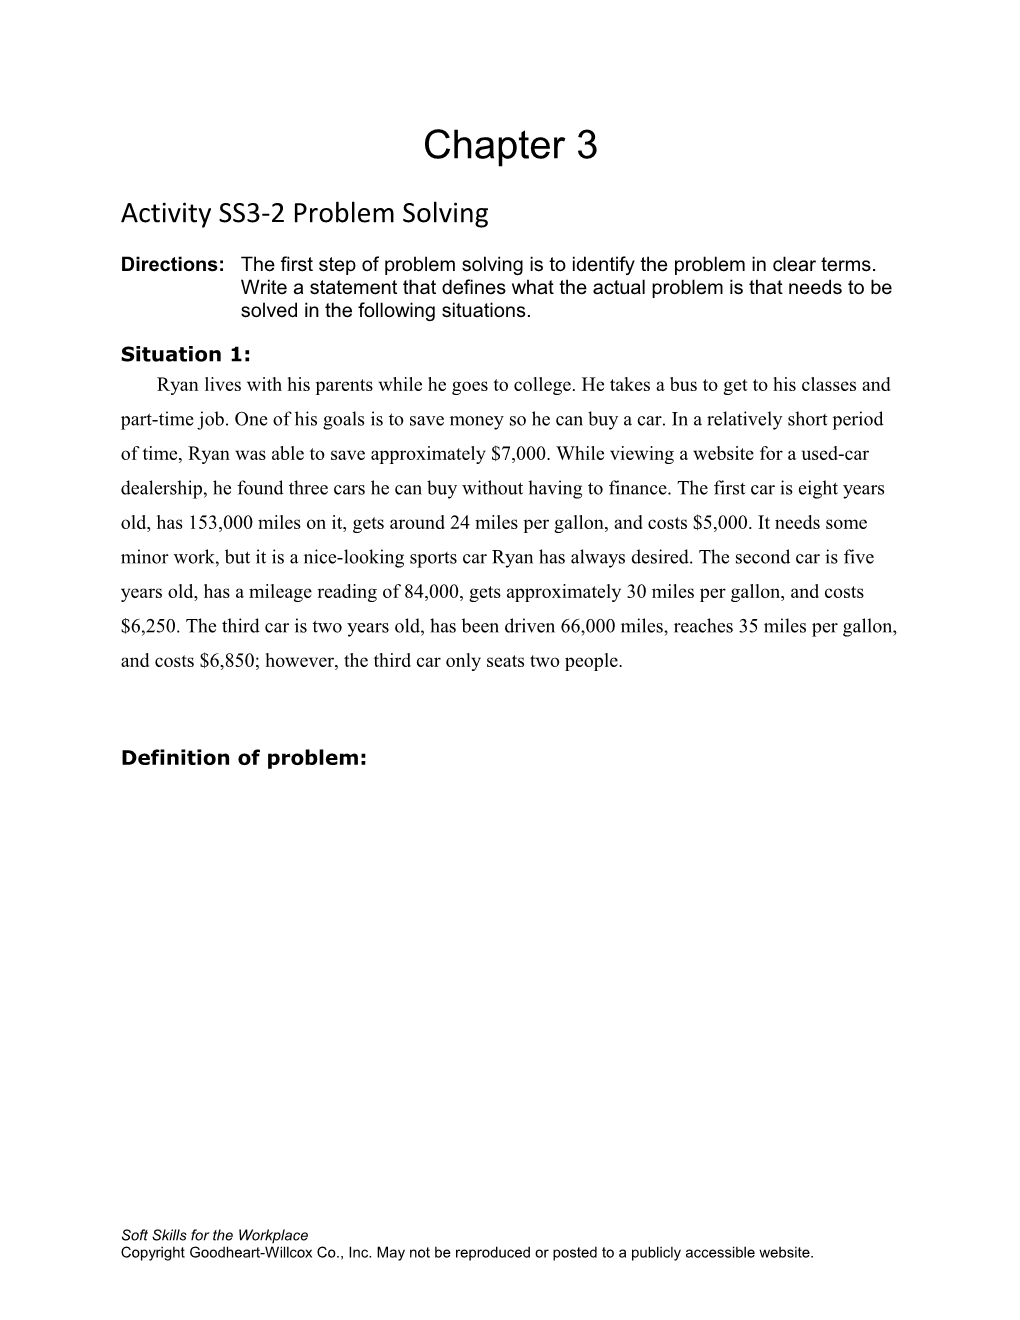 Activity SS3-2 Problem Solving